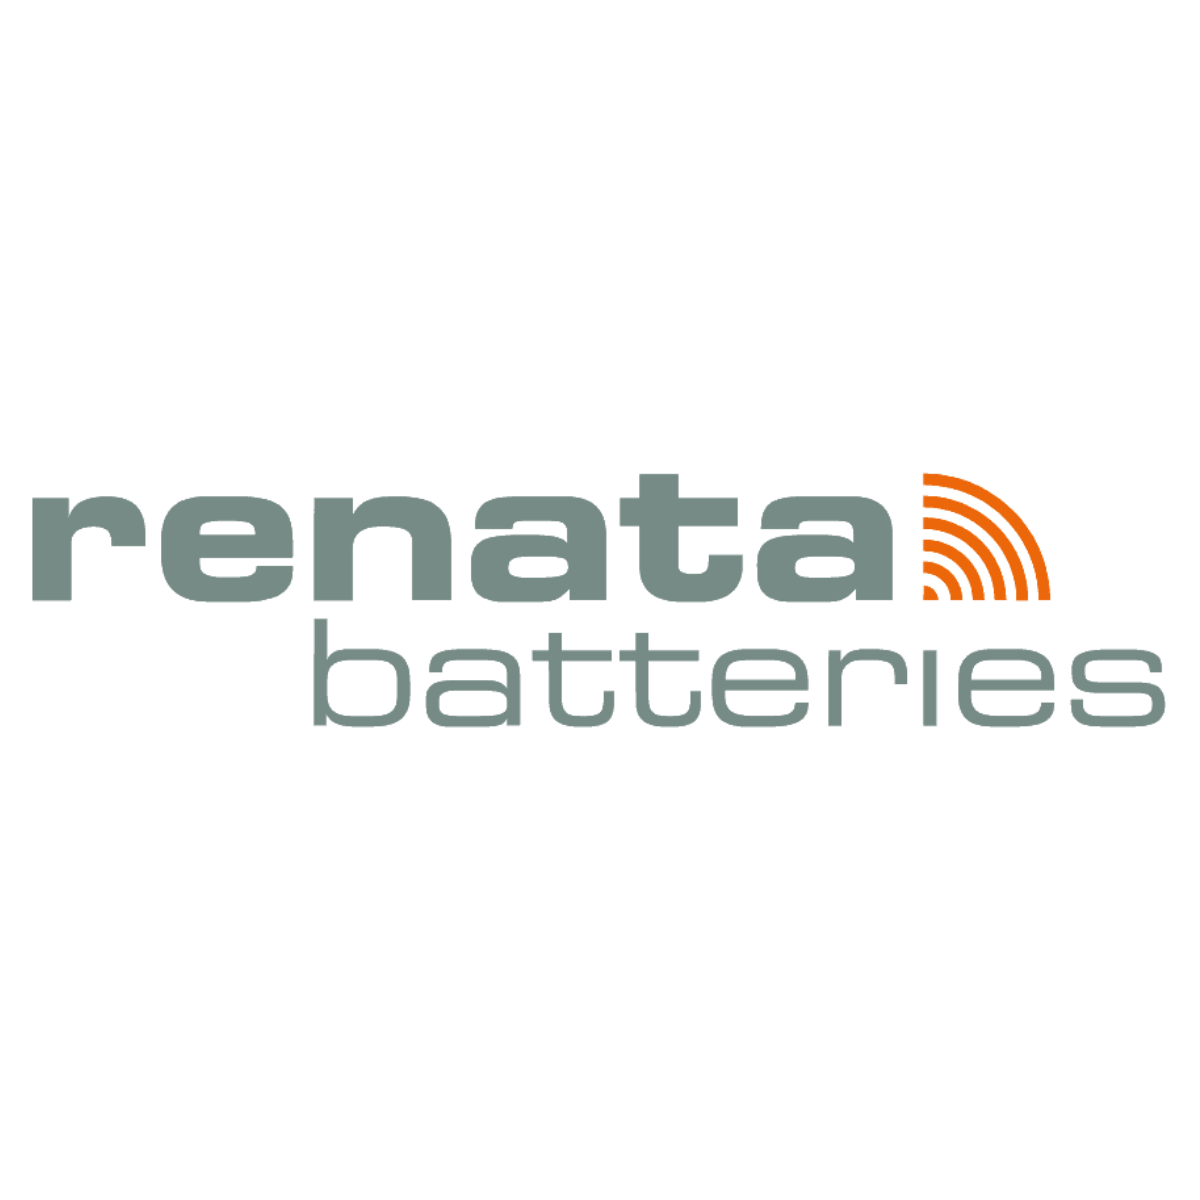 RENATA 377: Renata, silver oxide, 24 mAh, 6.8 x 2.6 mm at reichelt